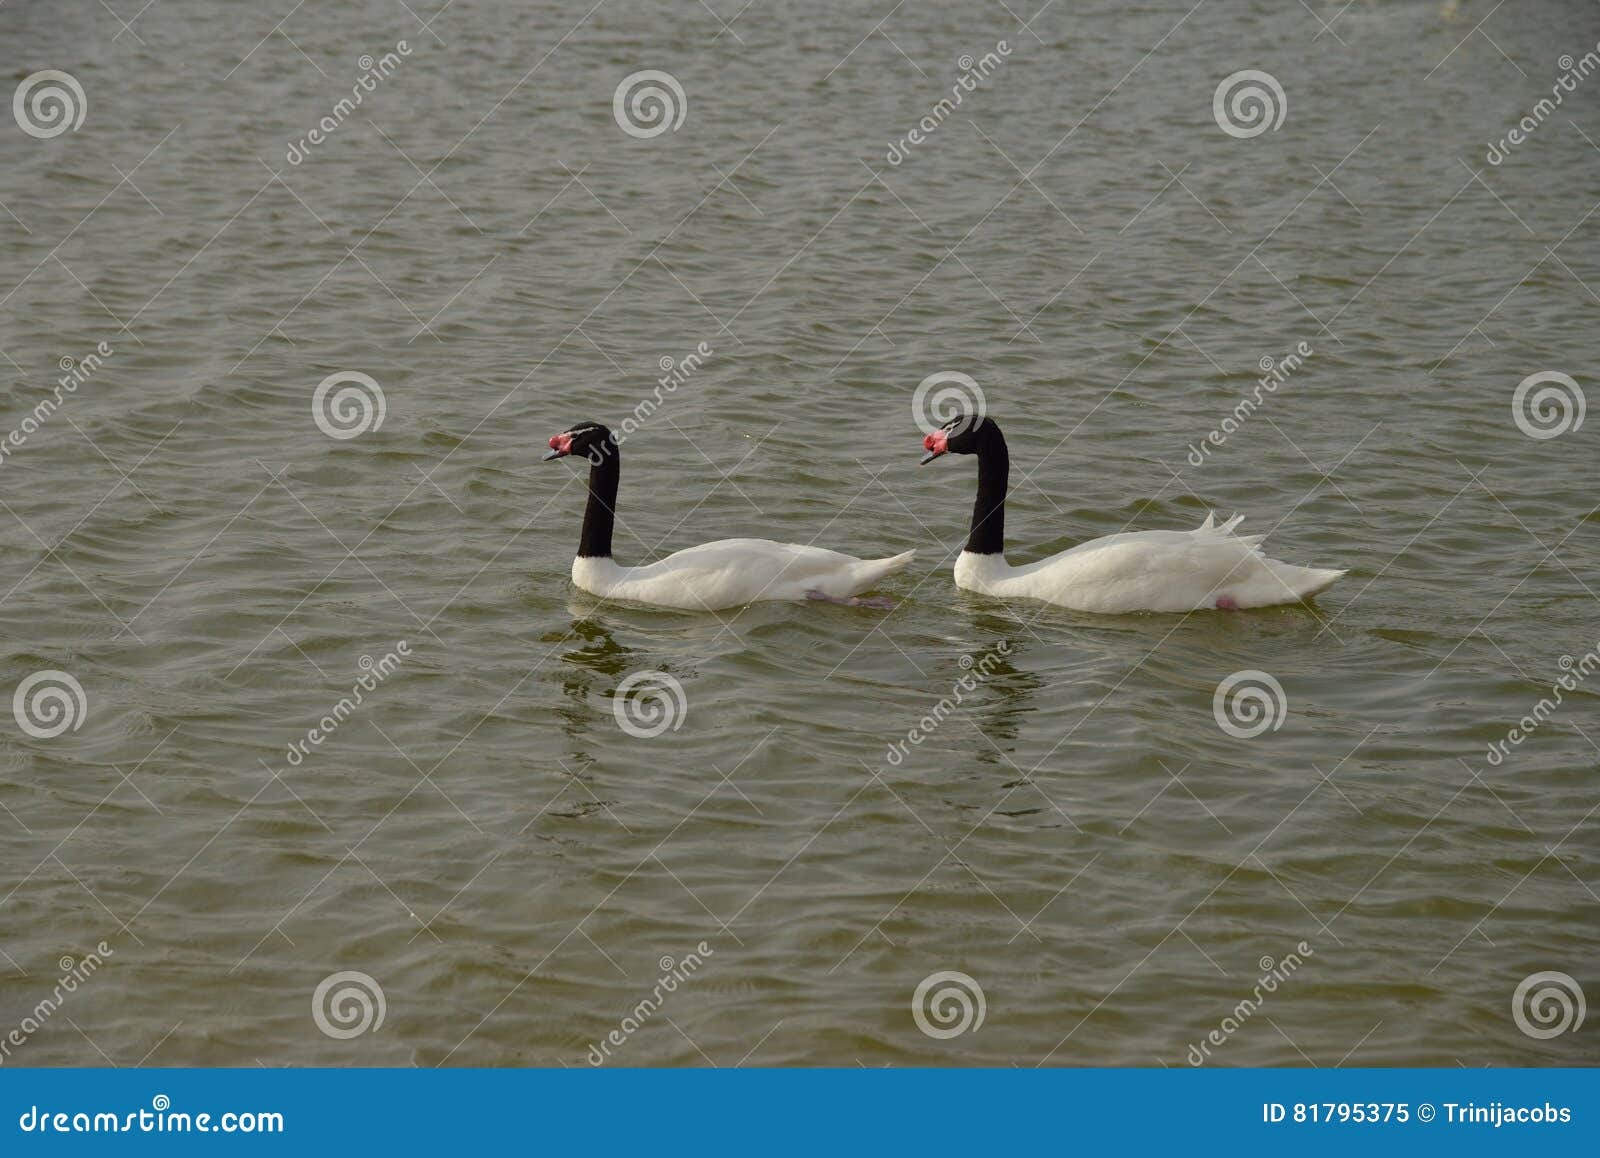 blacknecked swans at al qudra lakes, dubai